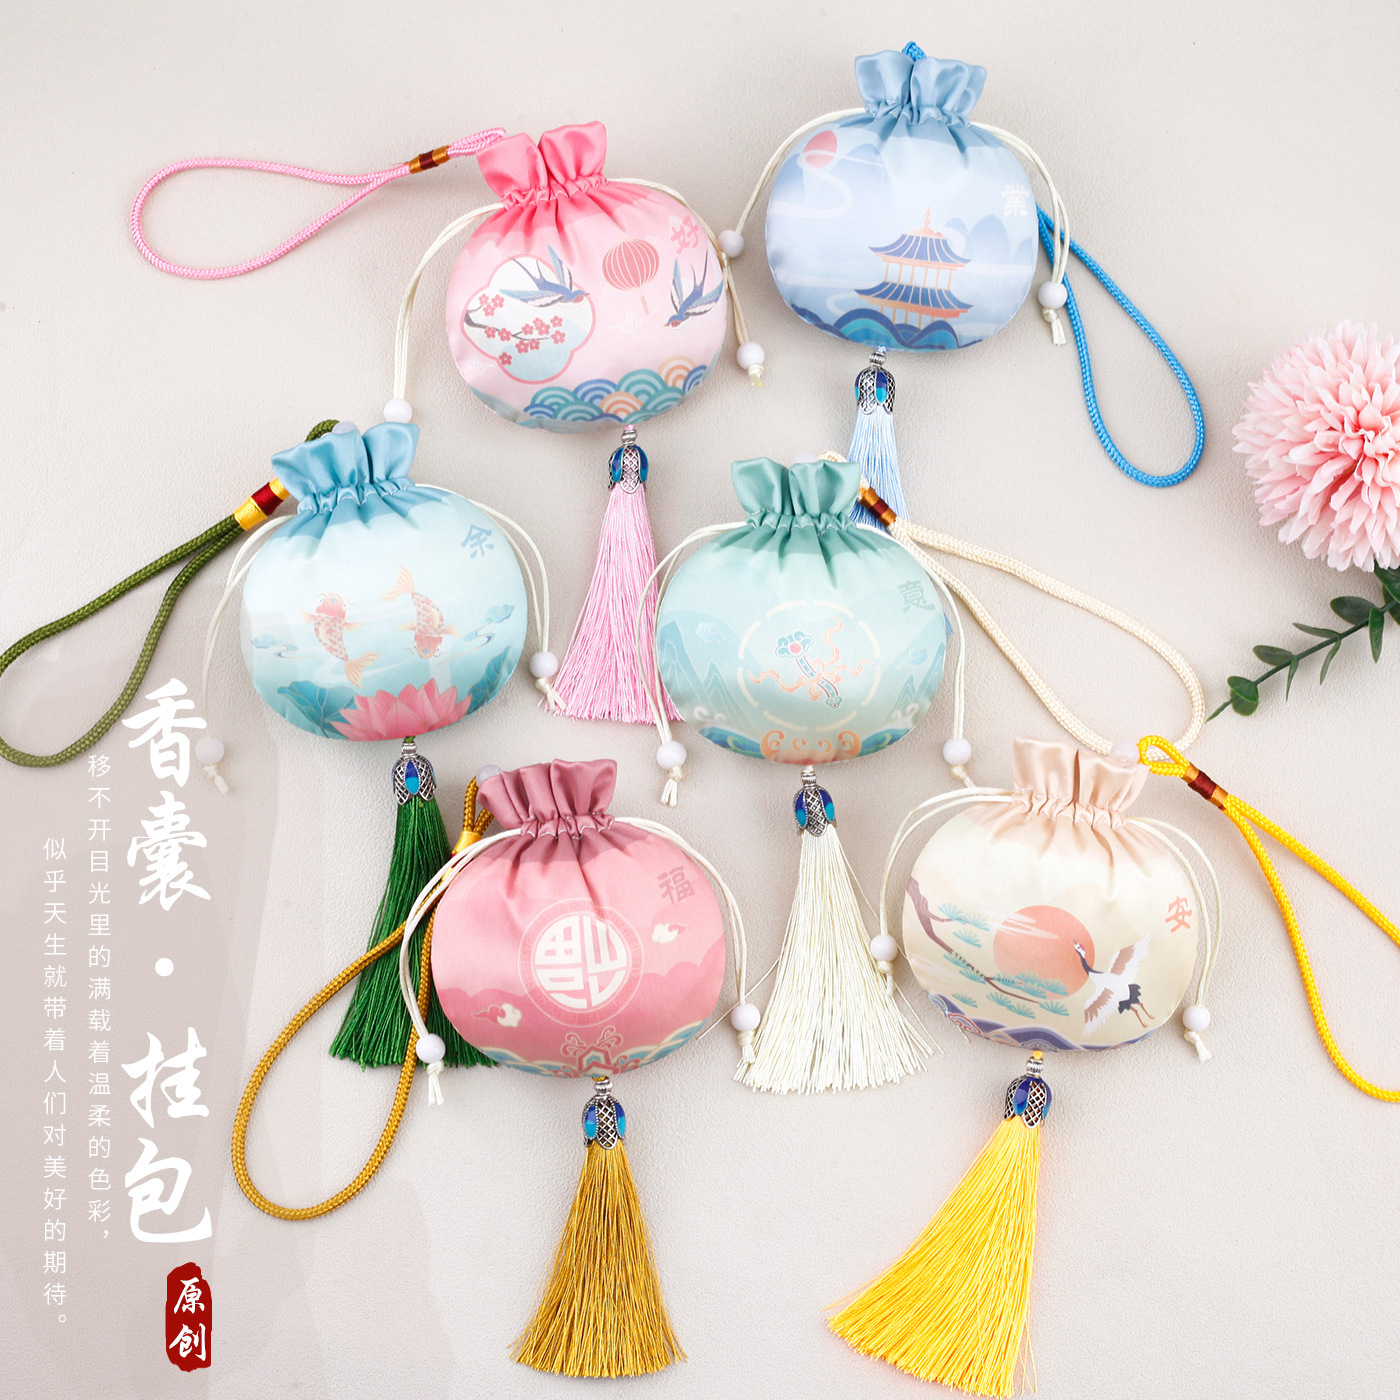 qinggeng dragon boat festival perfume bag bag antique embroidery printed pouch portable decorative pendant sachet hanfu sachet